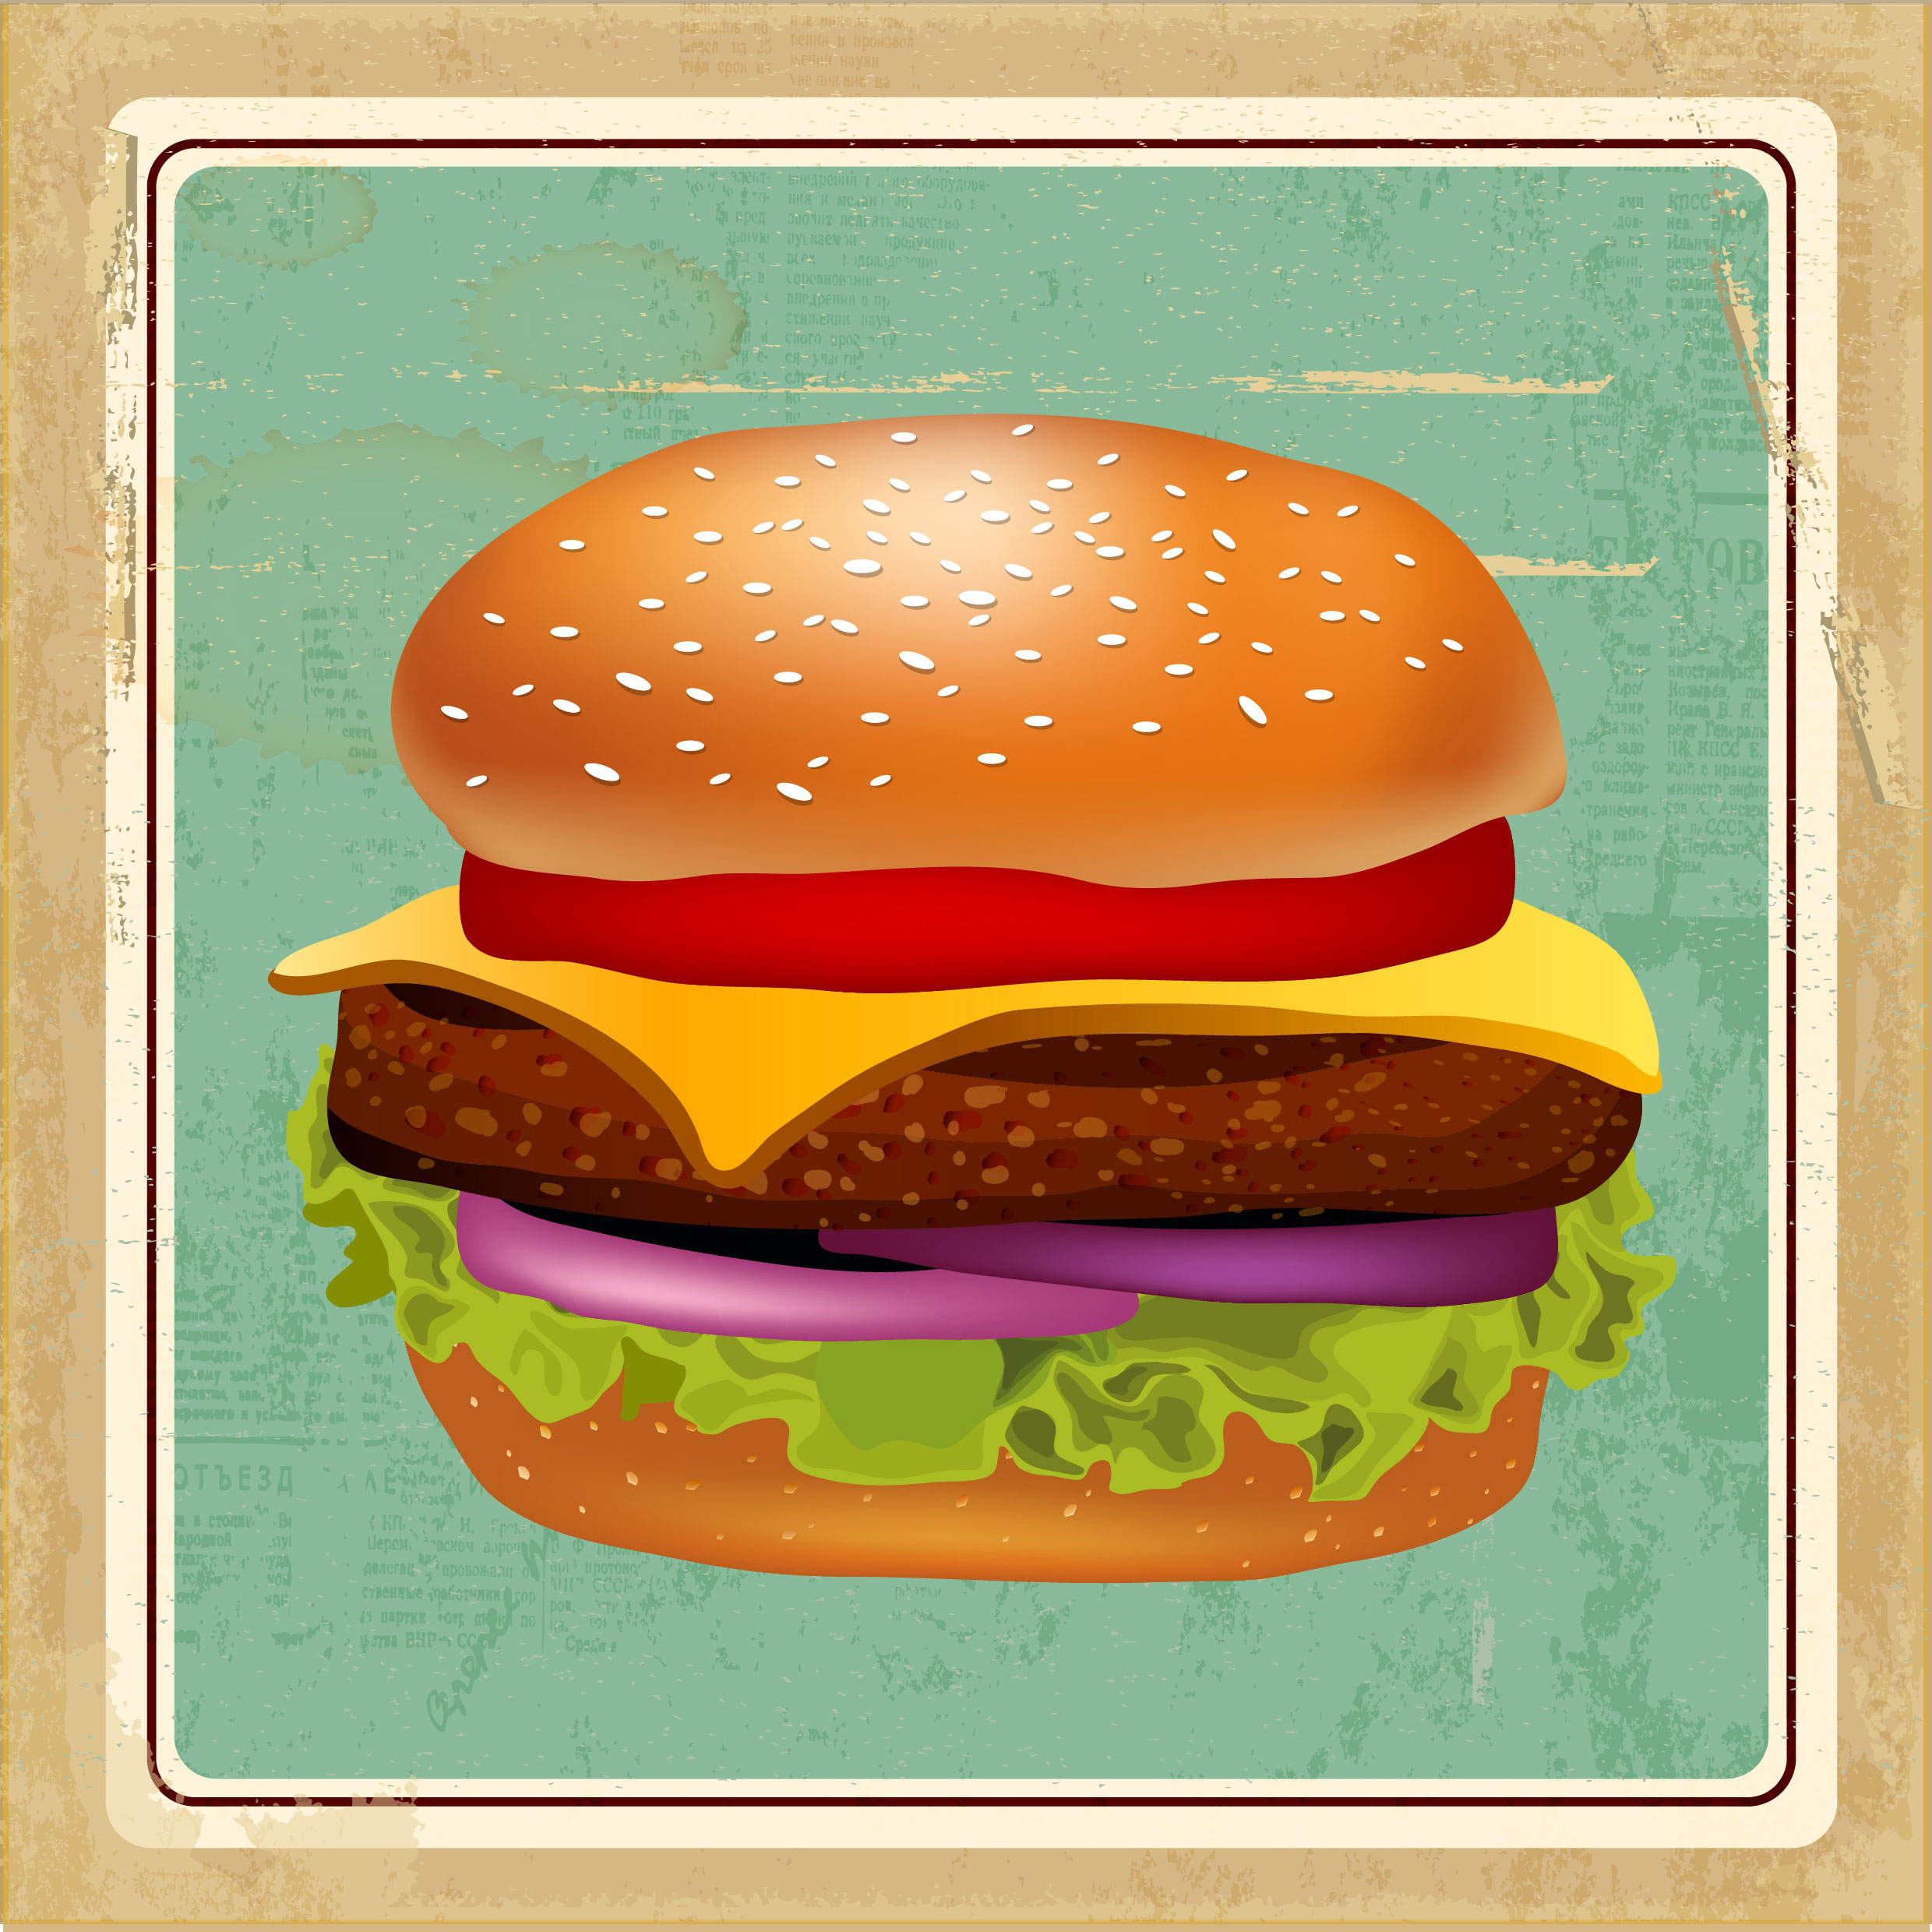 Feast of Choice – the Hamburger